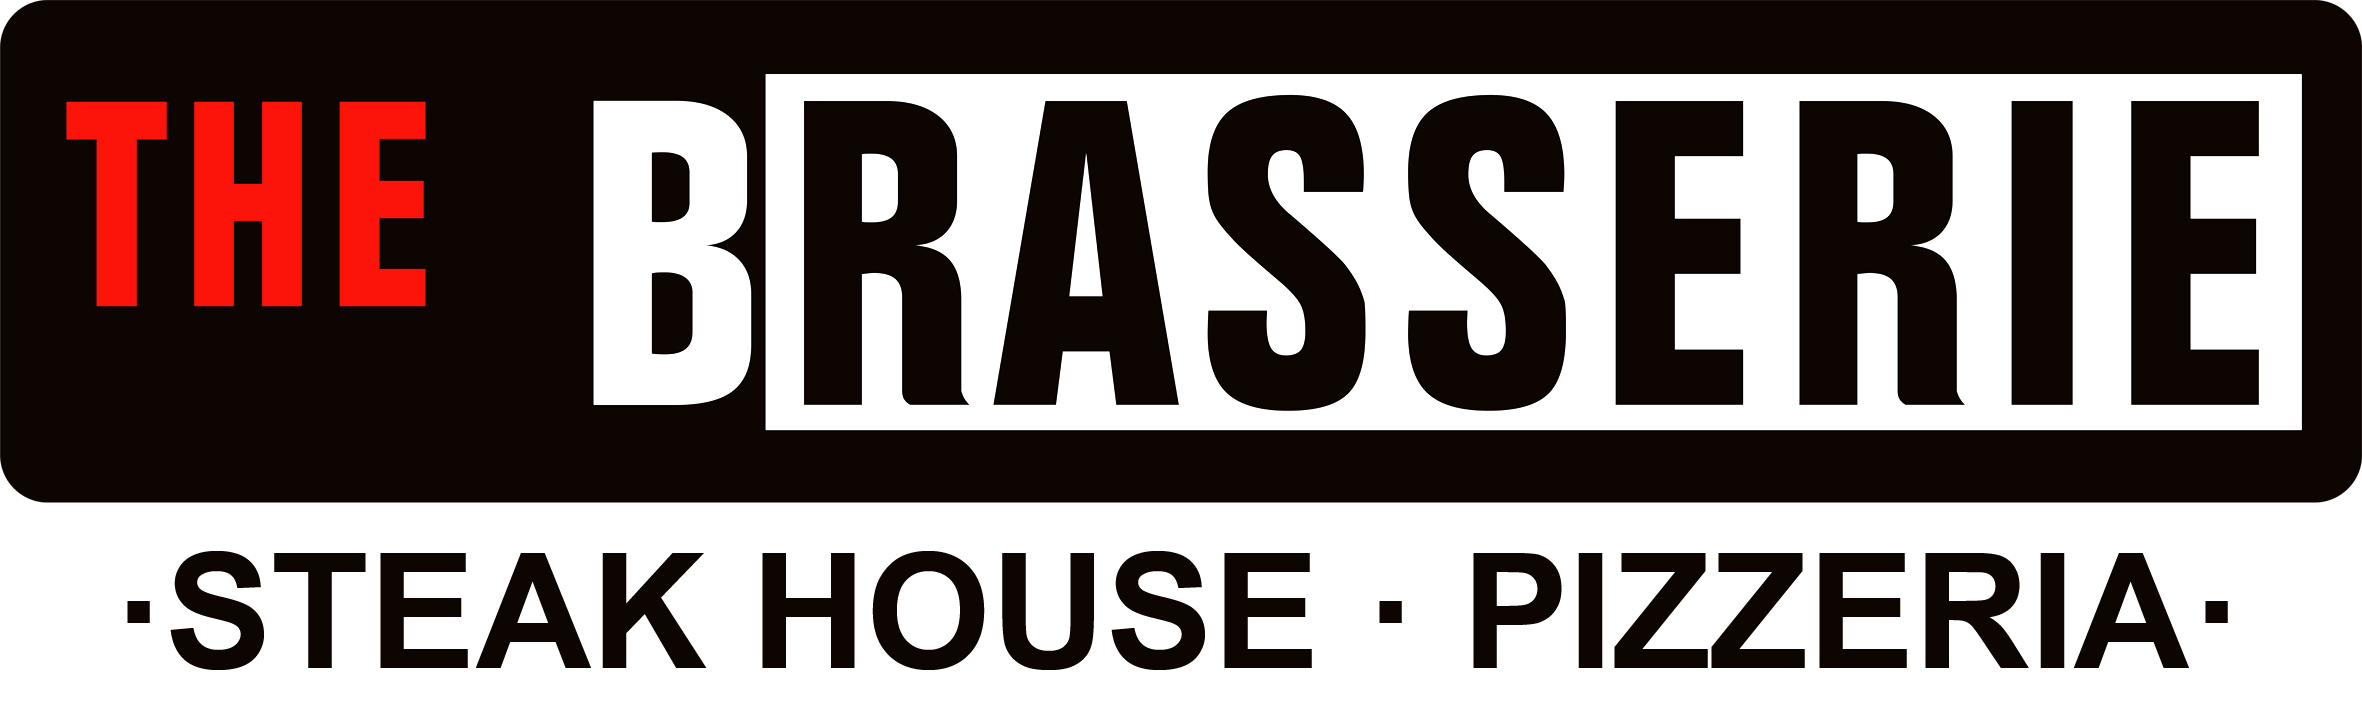 Logo The Brasserie nuevo